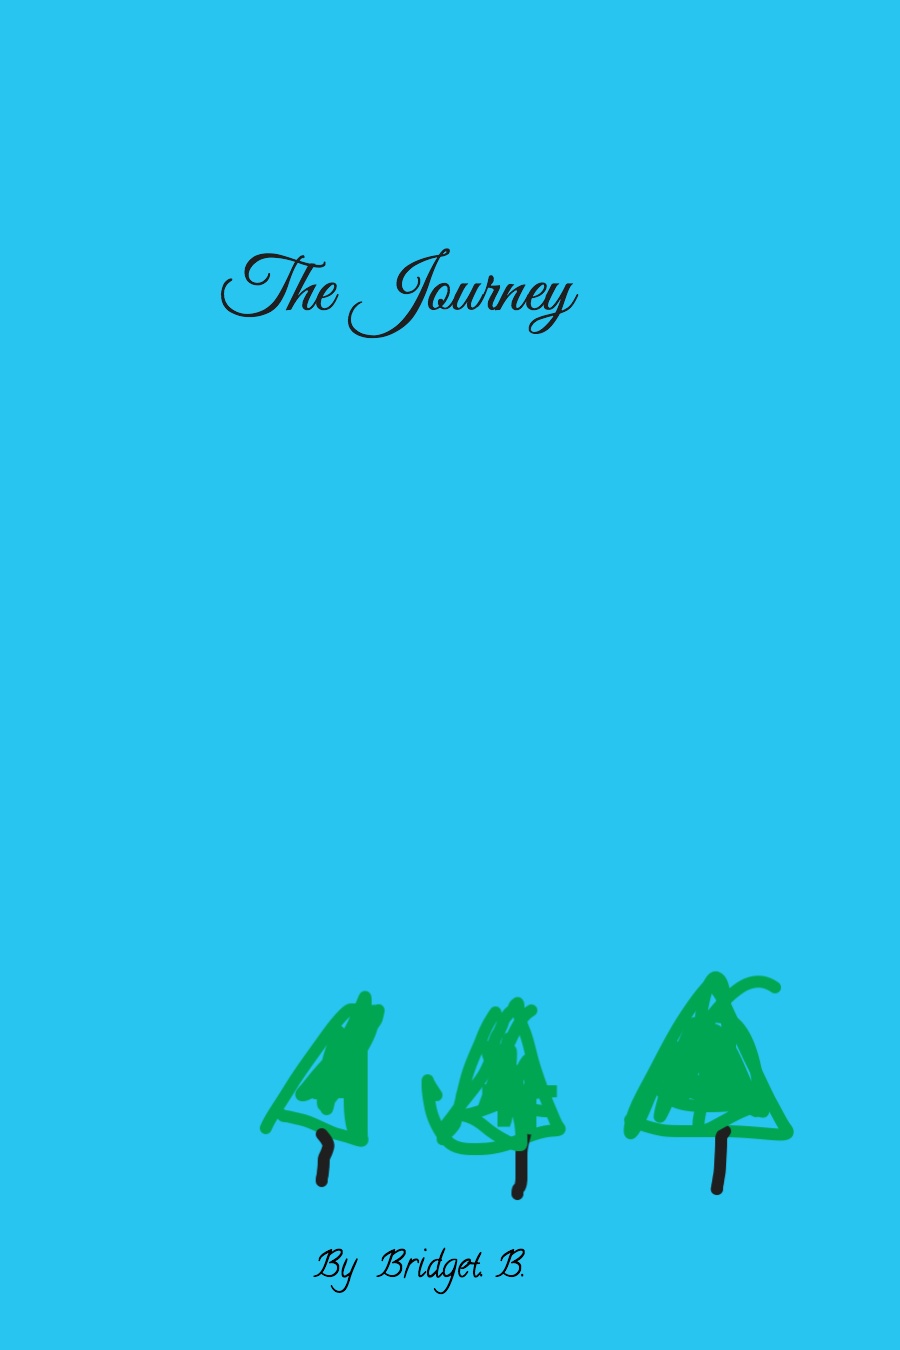 The Journey by Bridget B